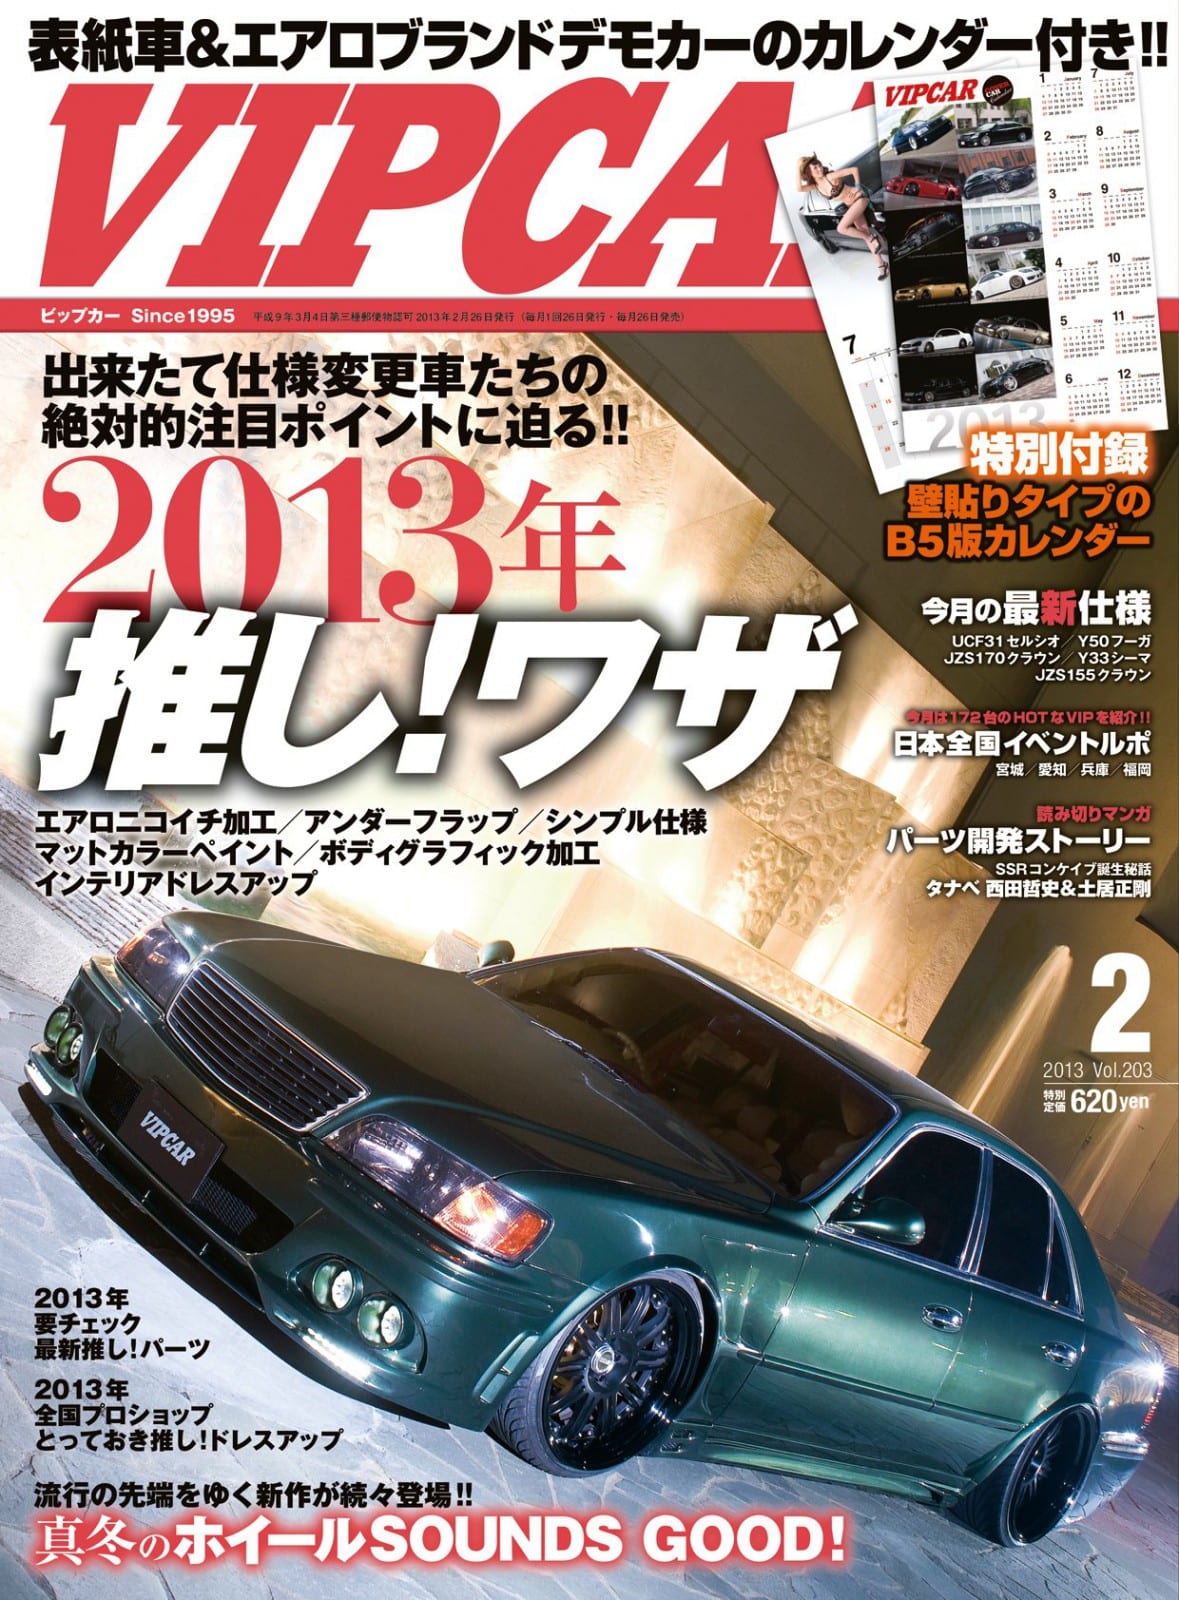 VIP CAR 2013年 02月号 芸文社カタログサイト